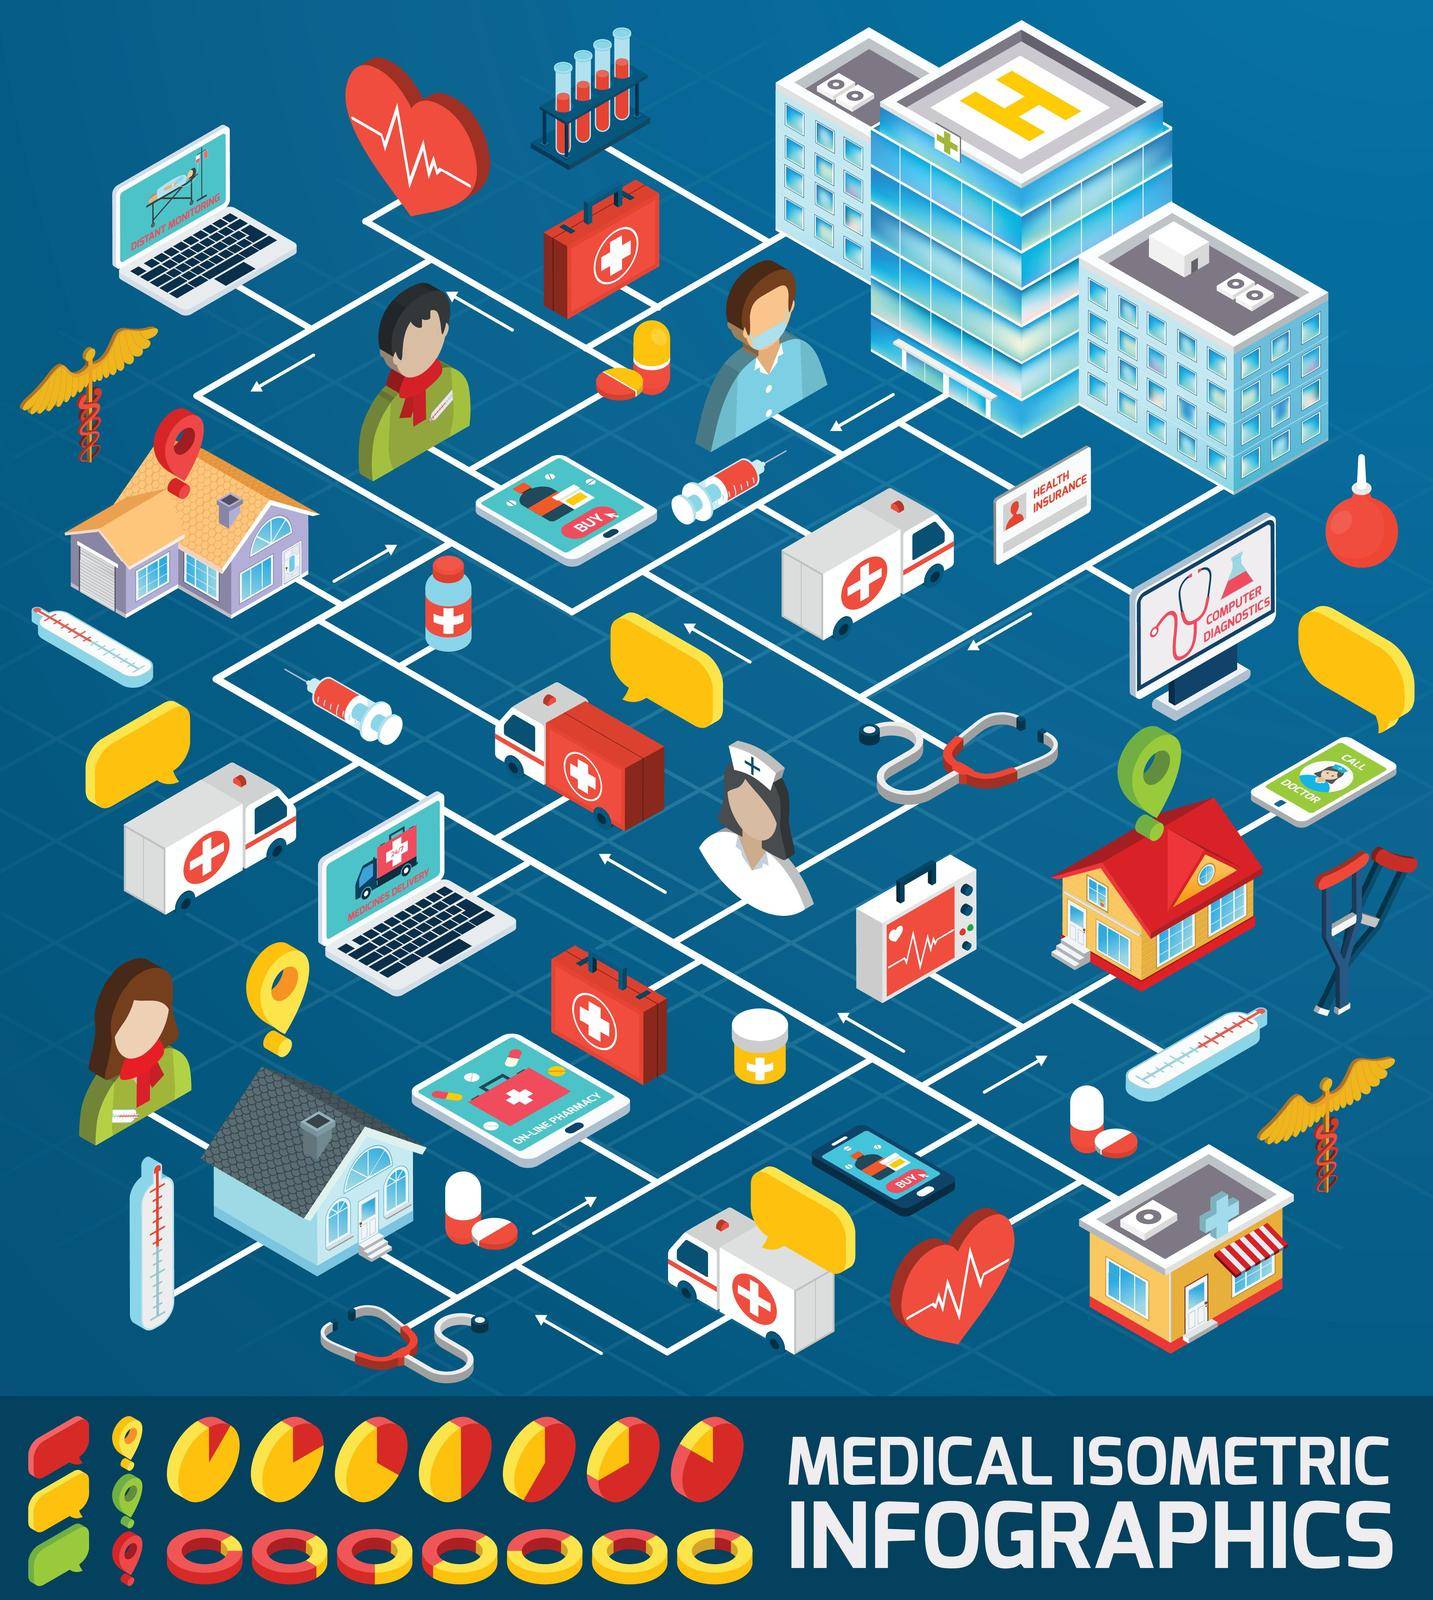 Medical Isometric Infographics by mstjahanara